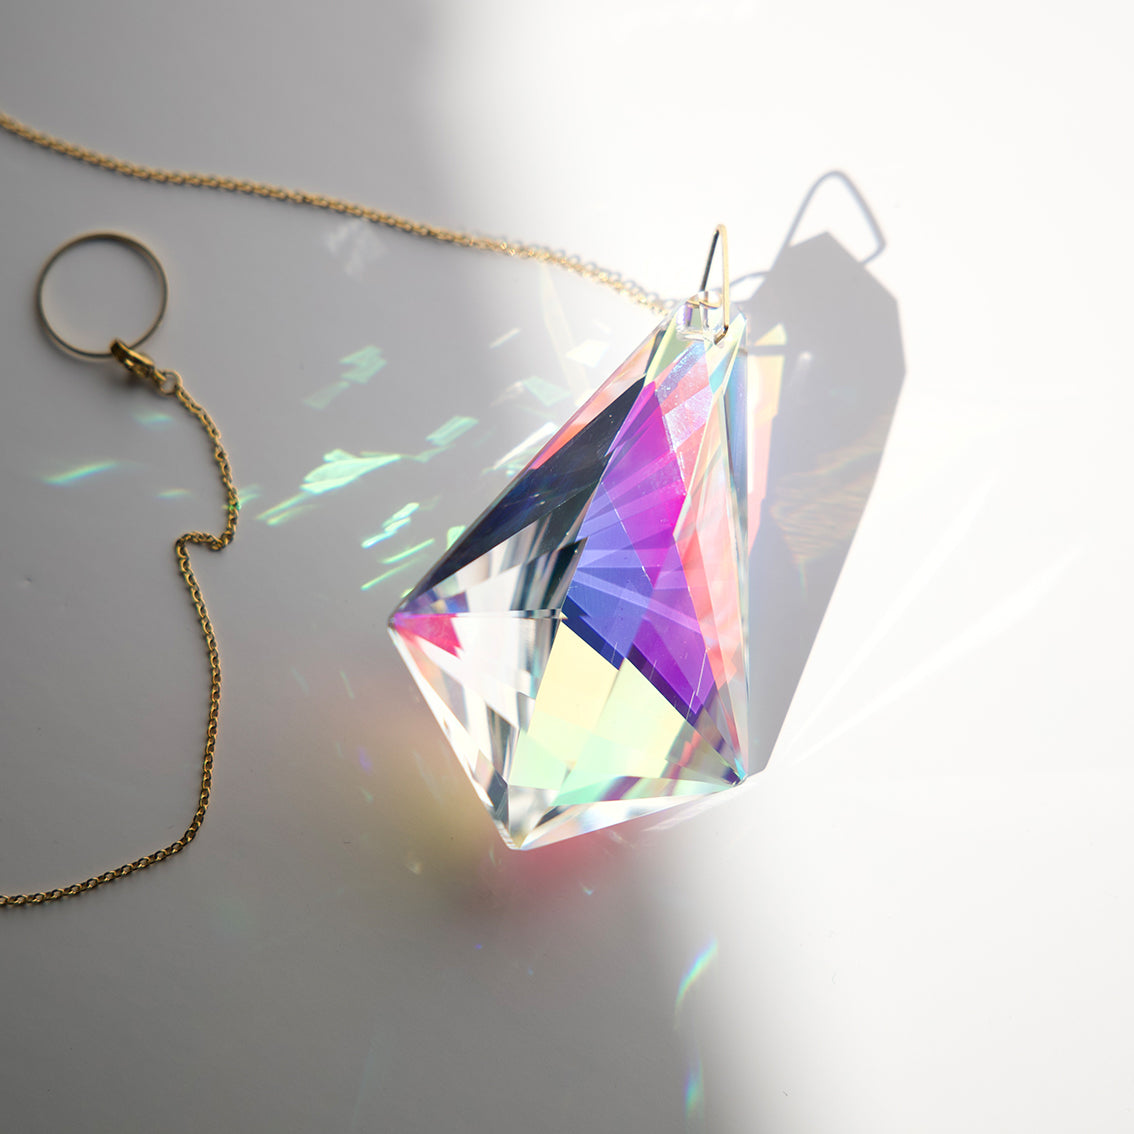 Grand cristal iridescent avec chaîne